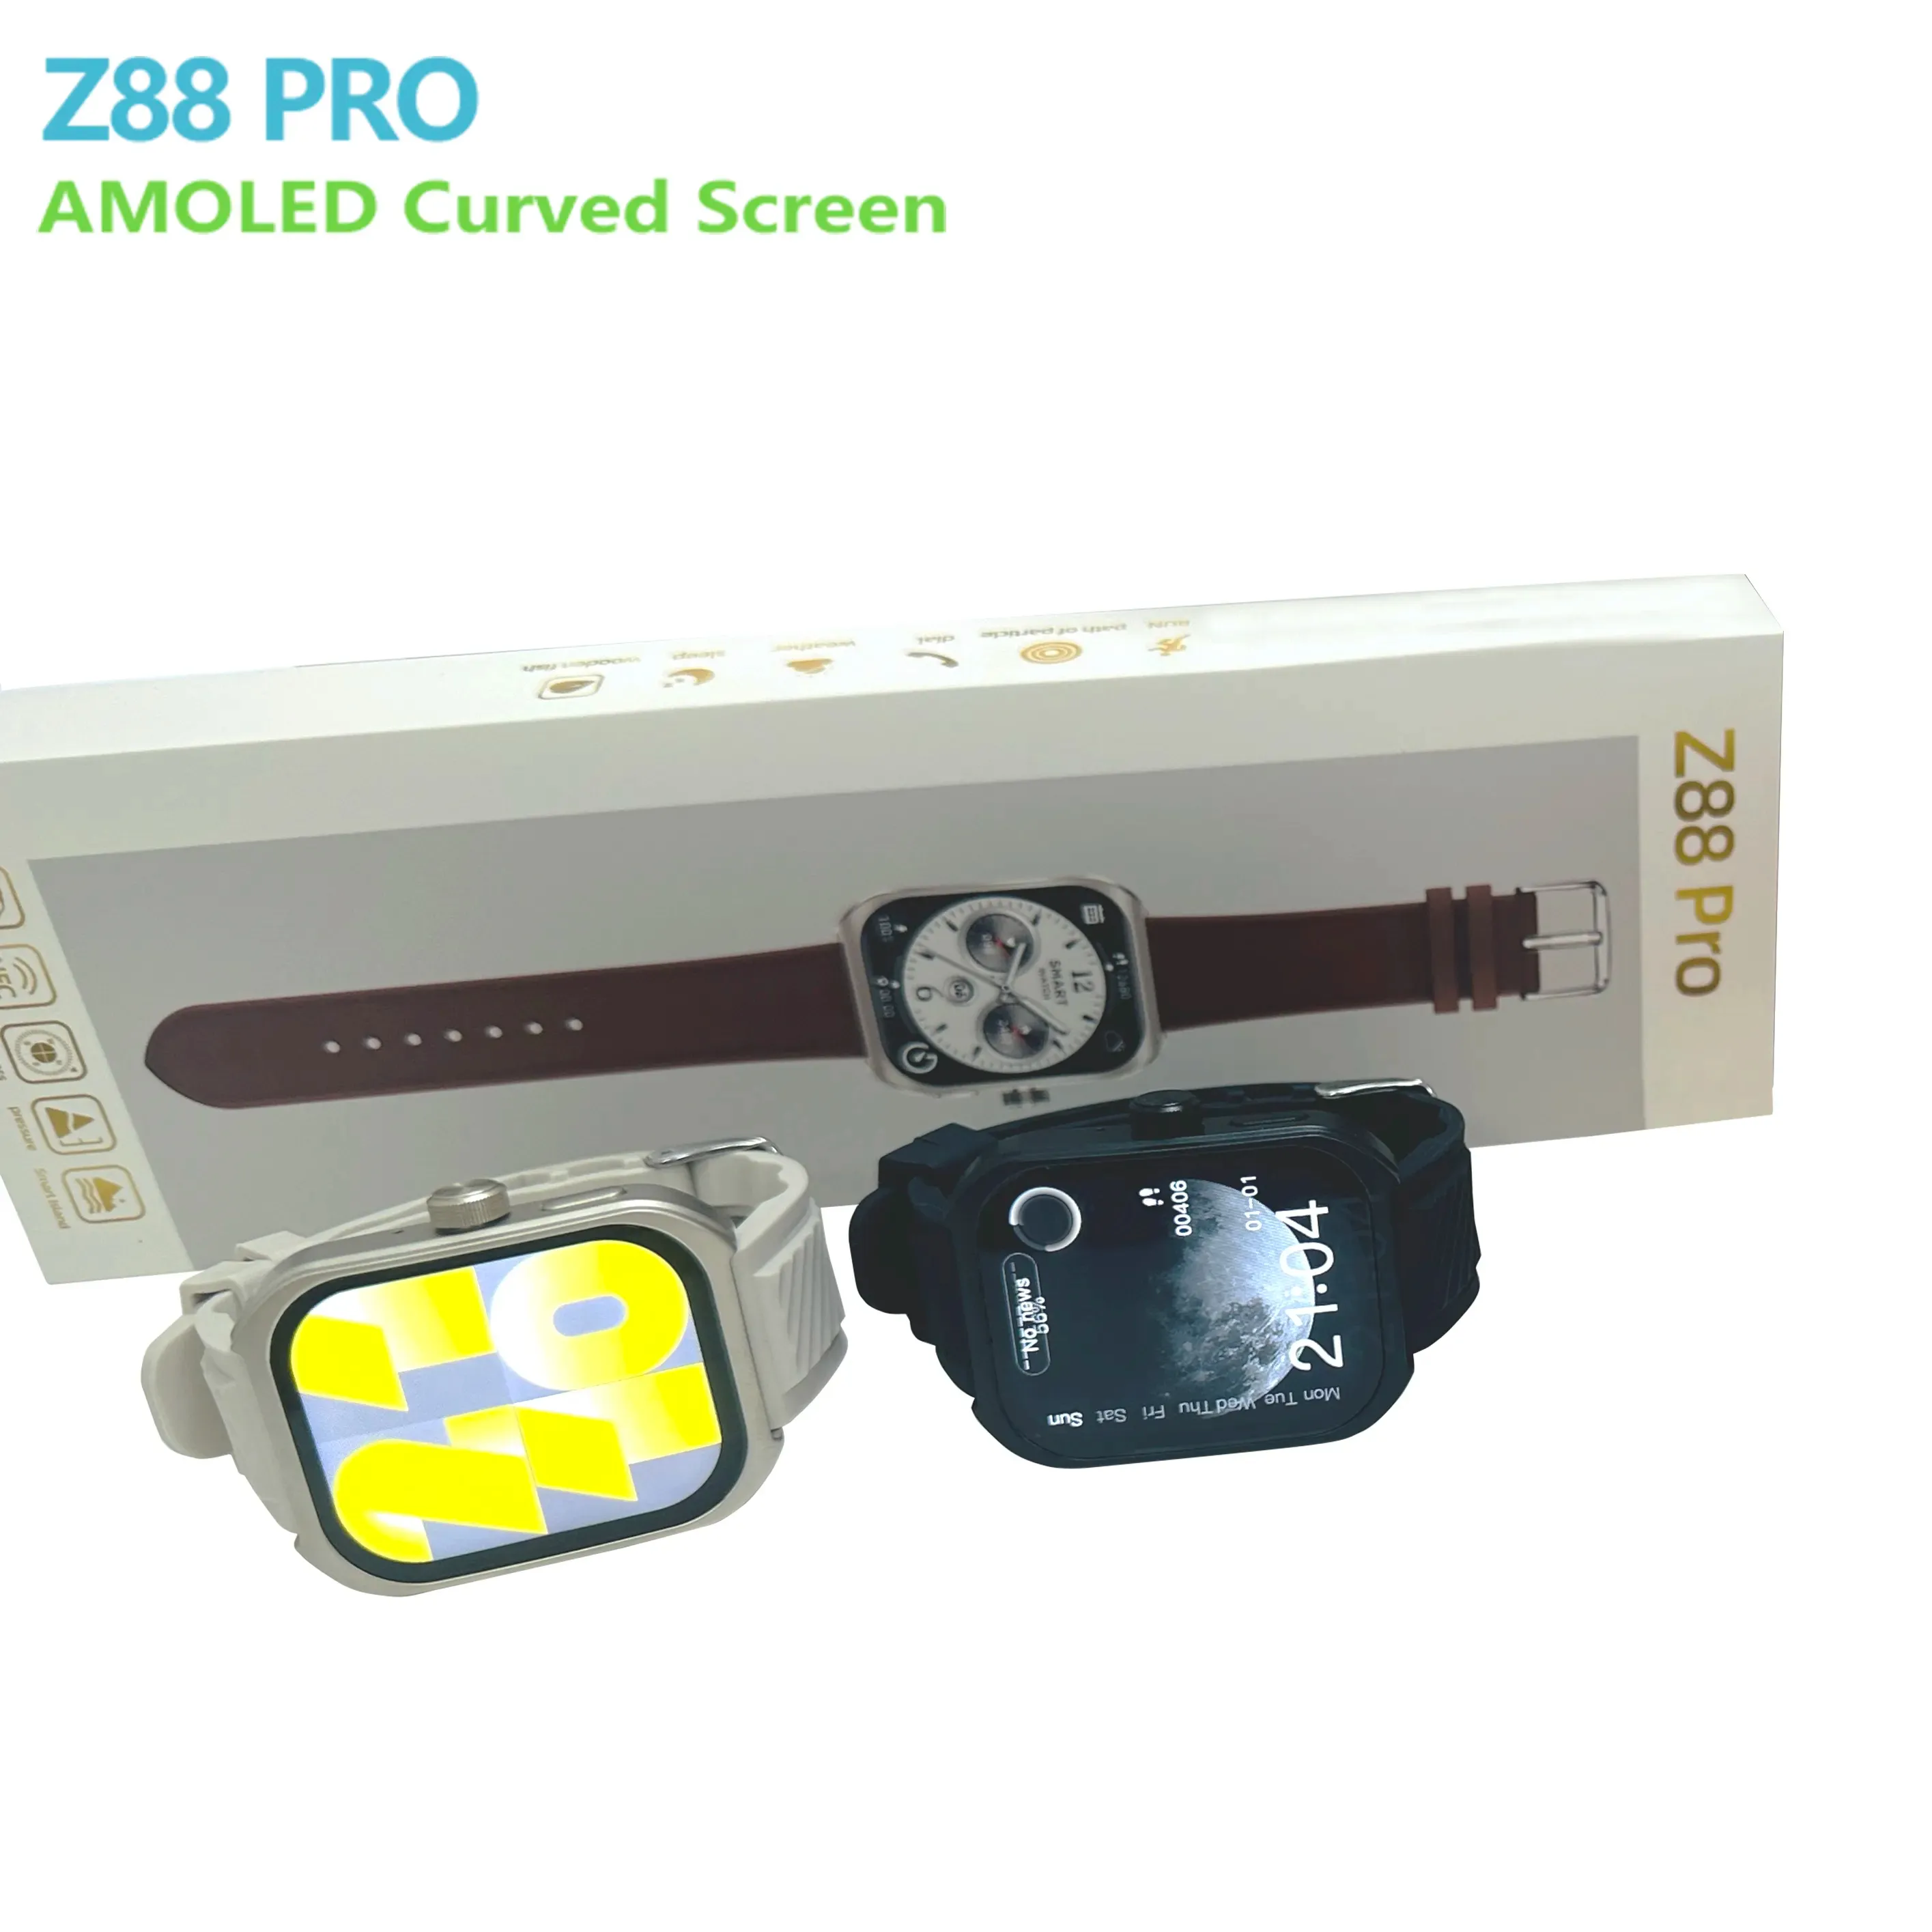 Best seller Z88 Pro smartwatch HD schermo curvo AMOLED Reloj Shop per orologi Online stile uomo orologi oa88 Series9 bracciale